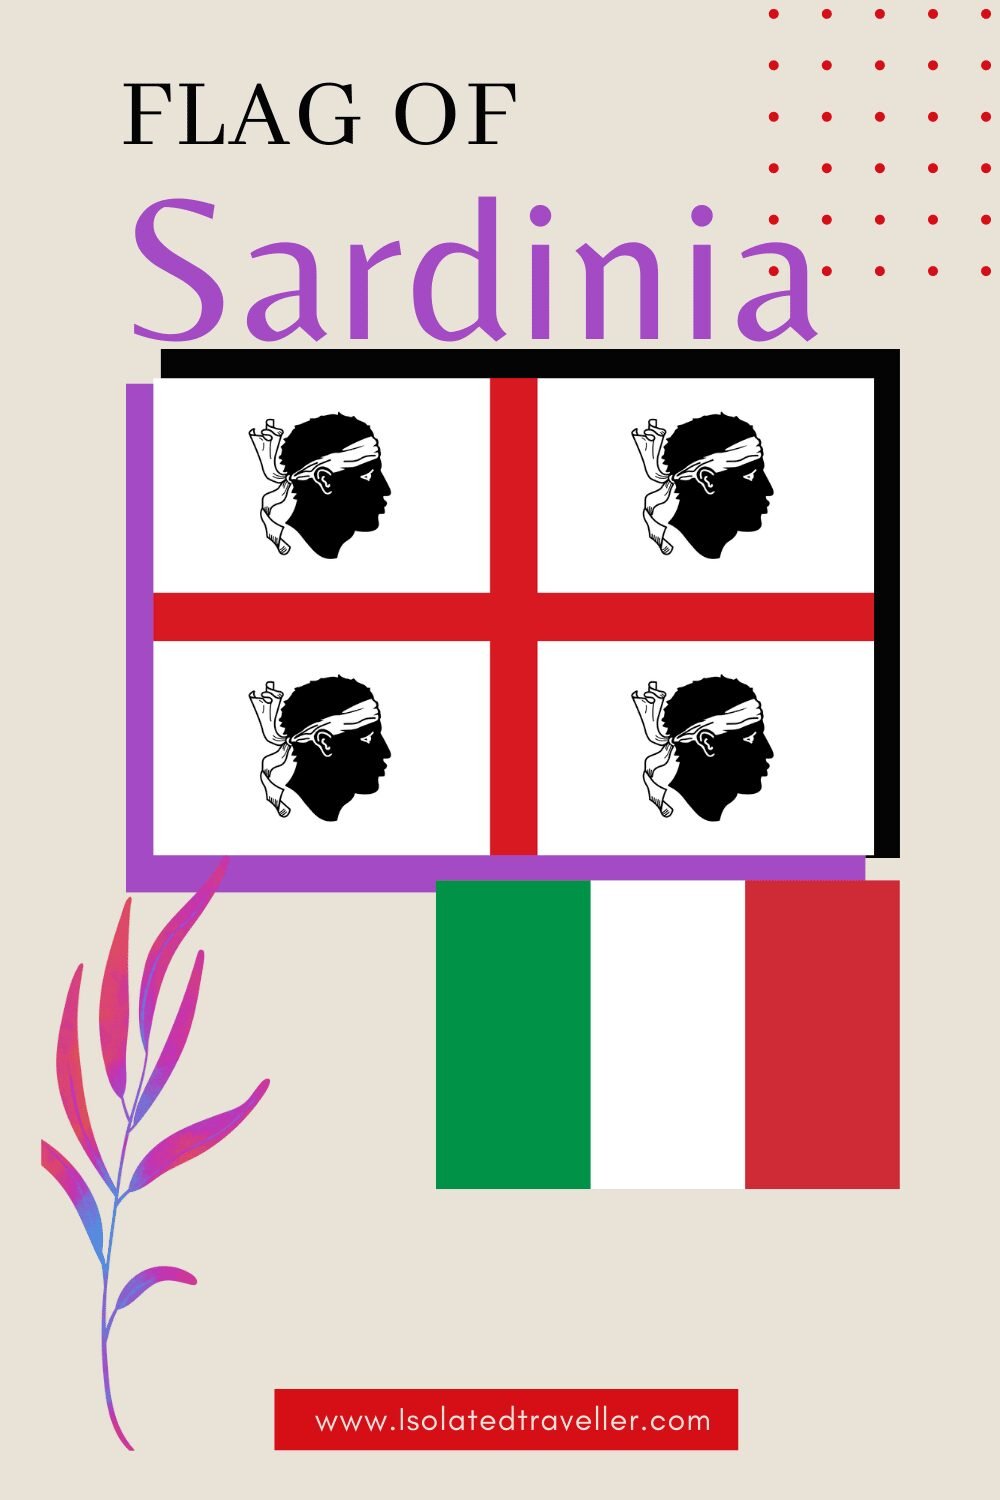 Flag of Sardinia - Pinterest